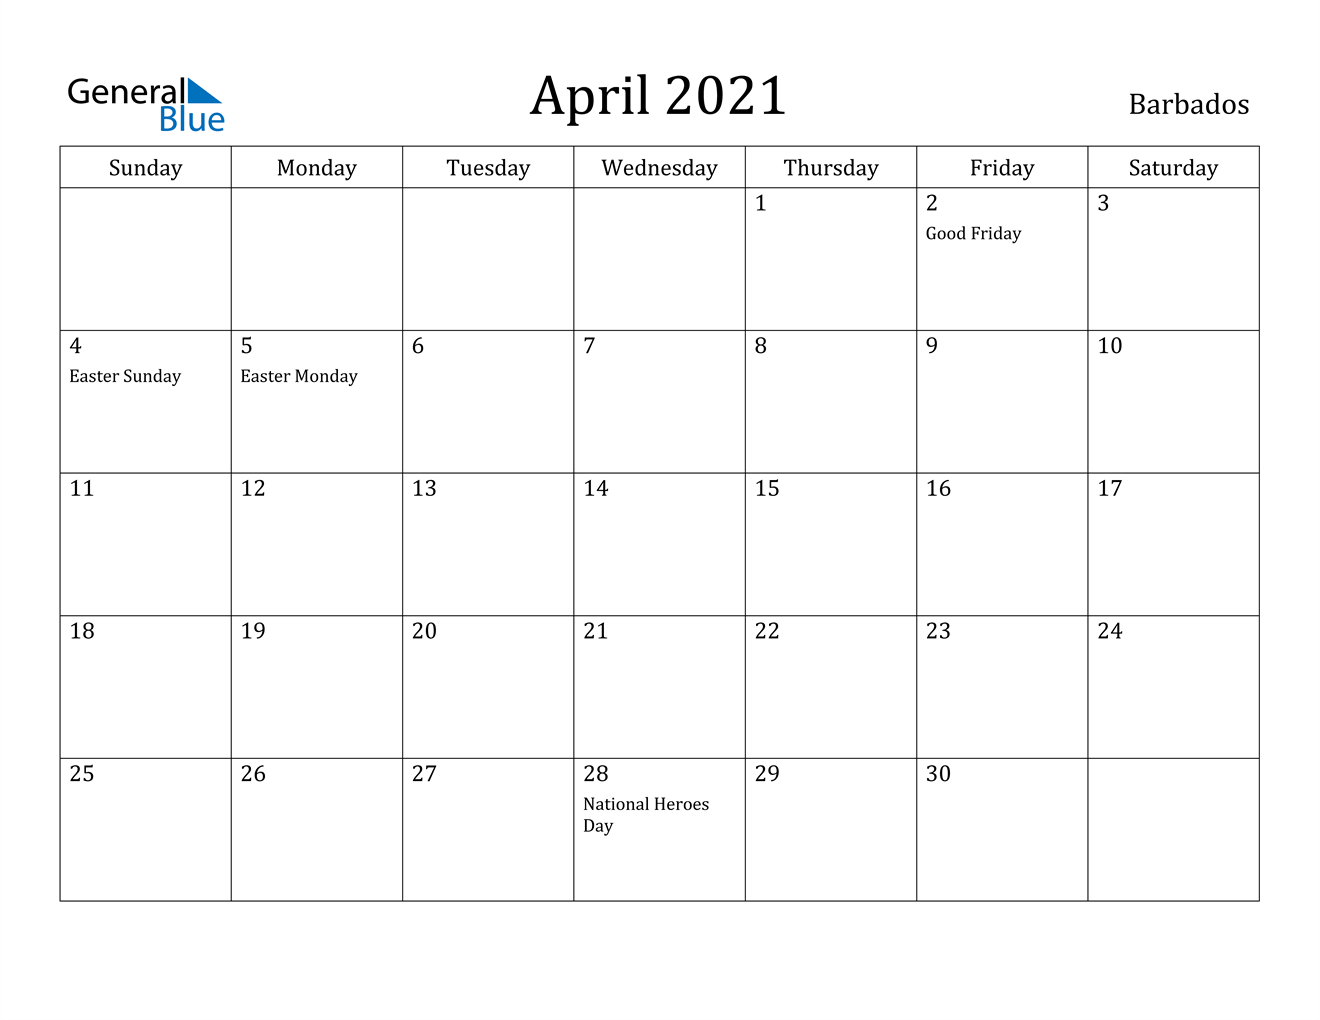 April 2021 Calendar - Barbados